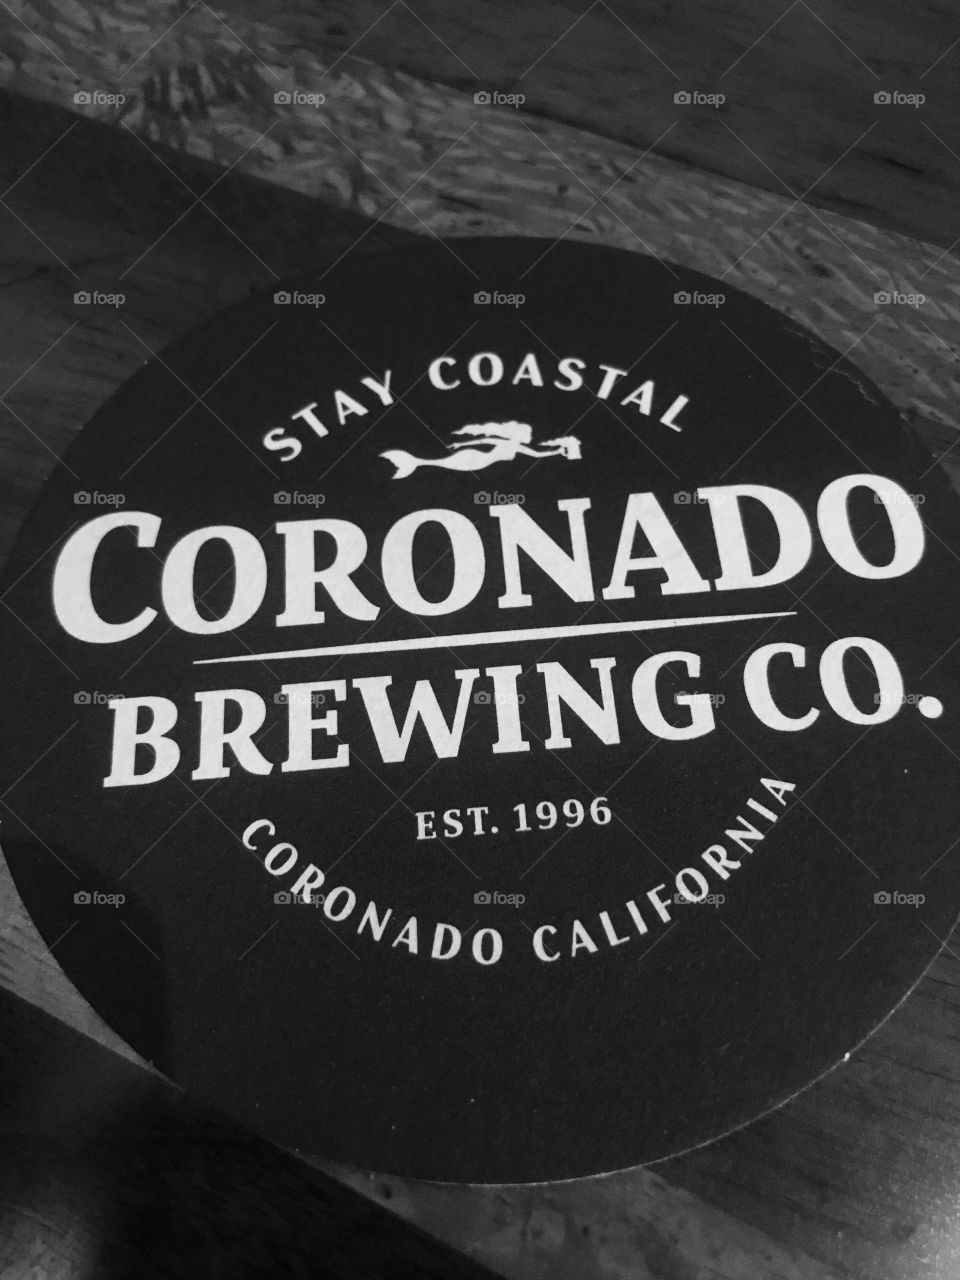 The Brew Coronado